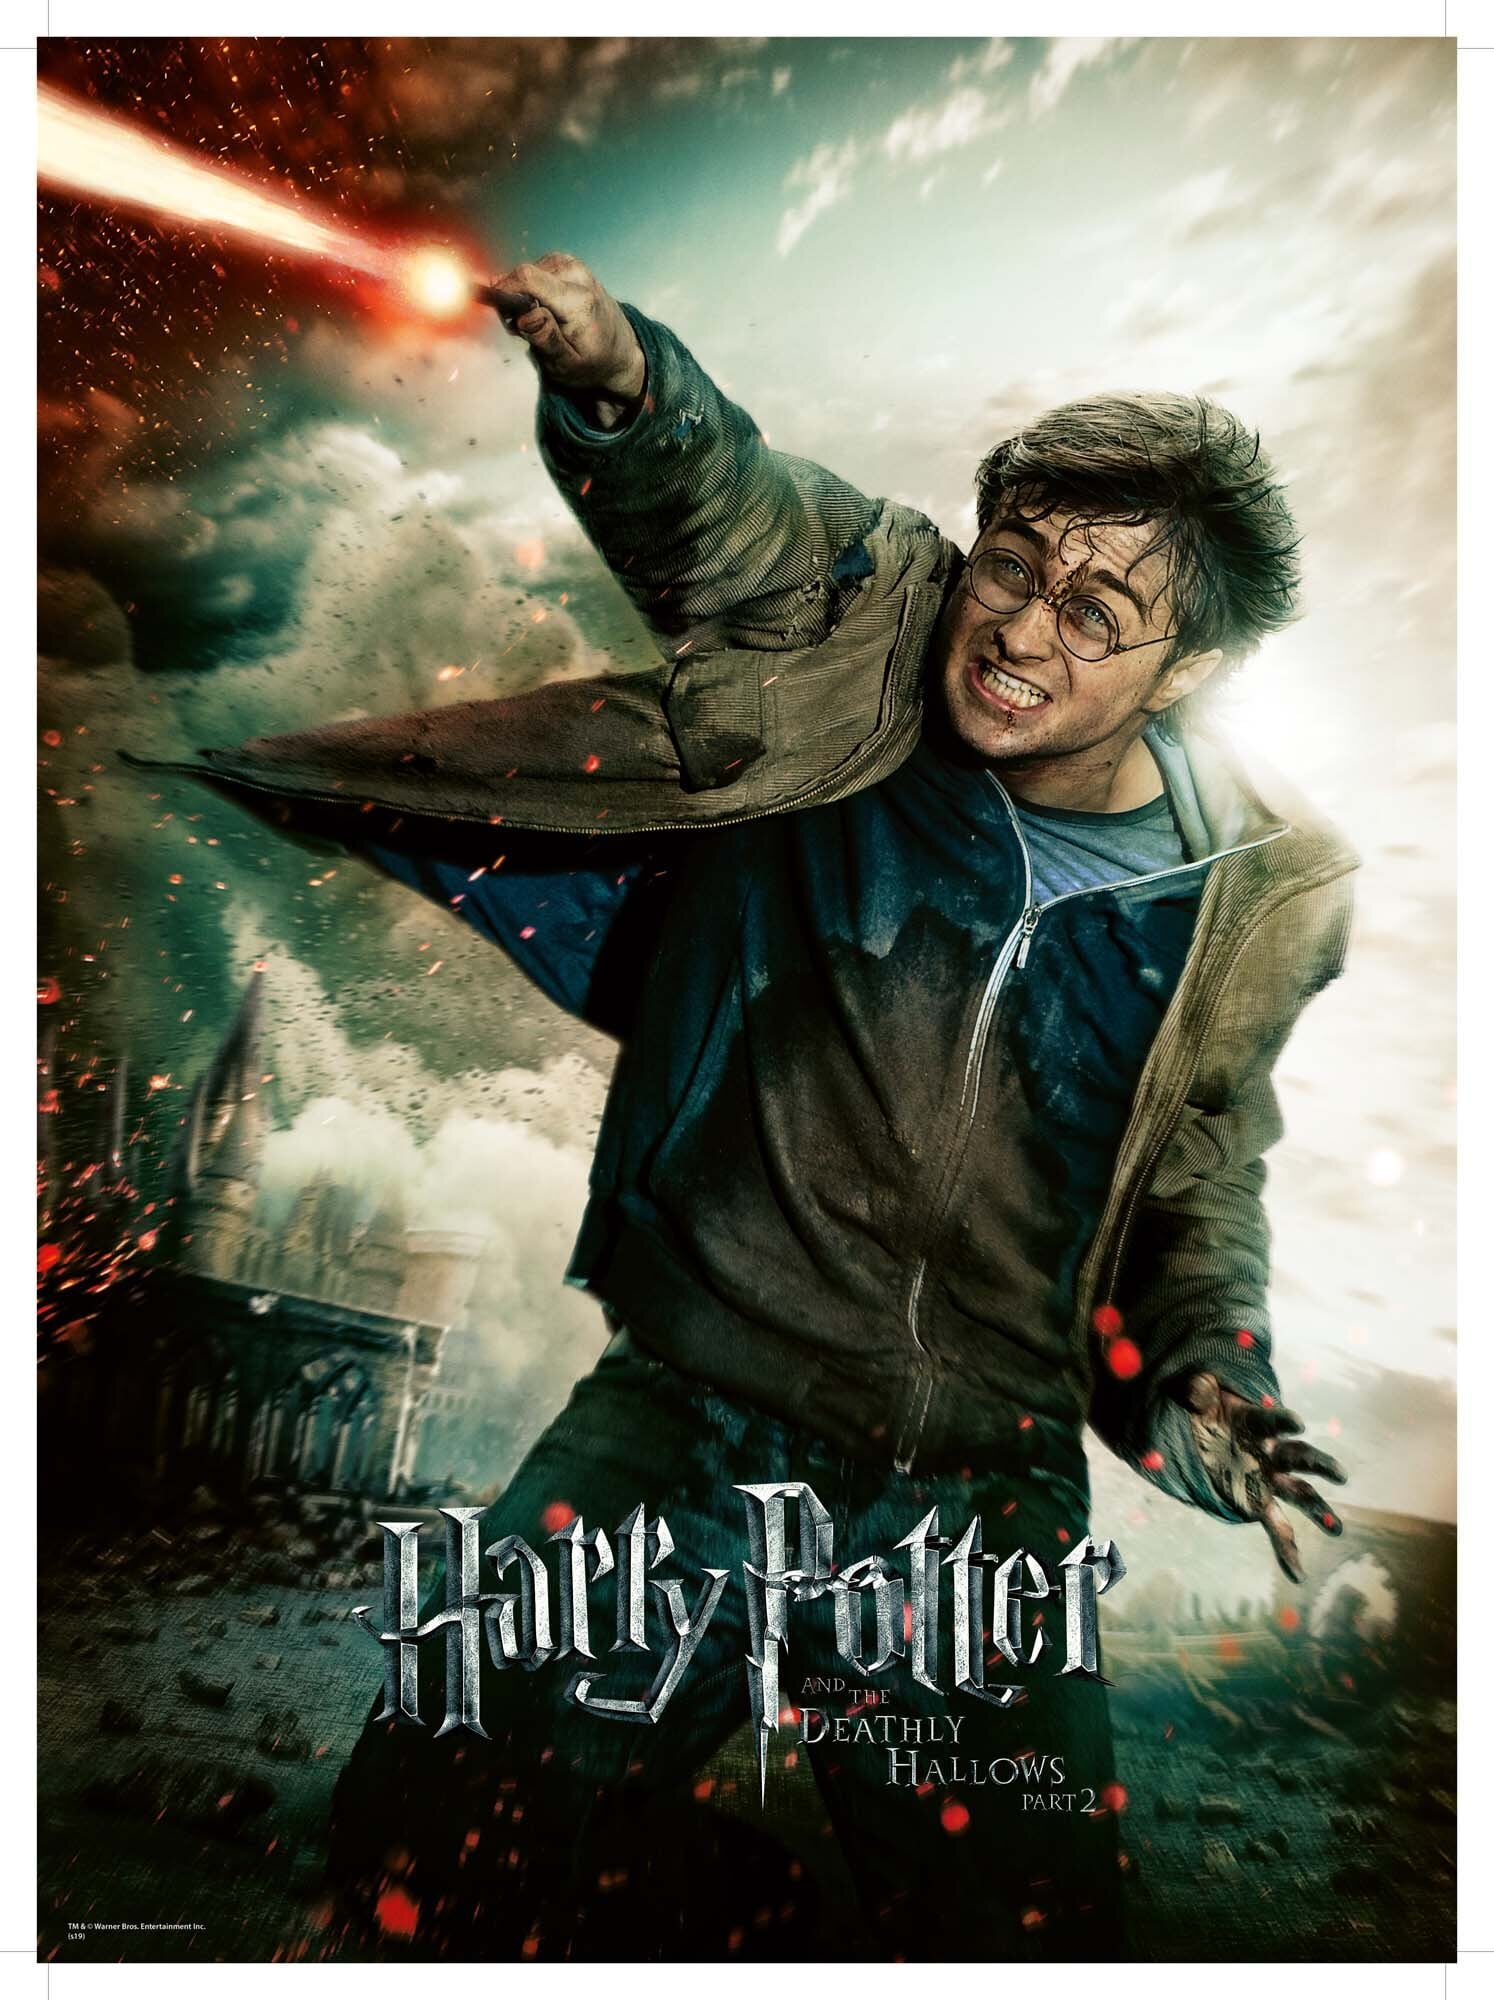 Ravensburger Pussel - Harry Potter 100 bitar XXL